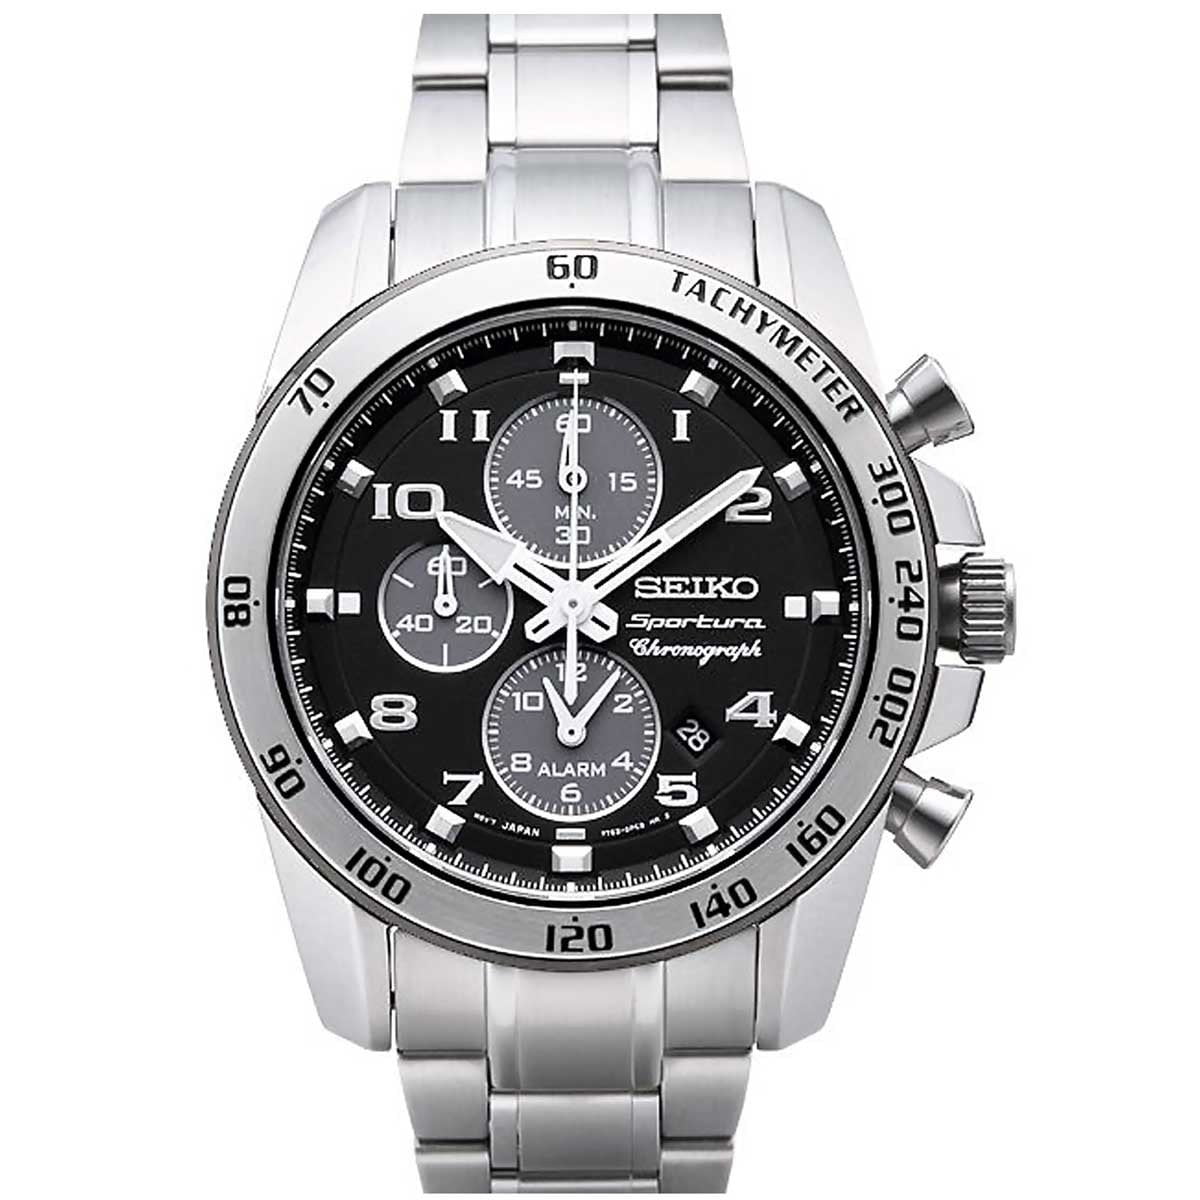 Seiko SNAE61P1 Sportura Black Dial Steel Bracelet Chronograph Alarm Watch - Walmart.com